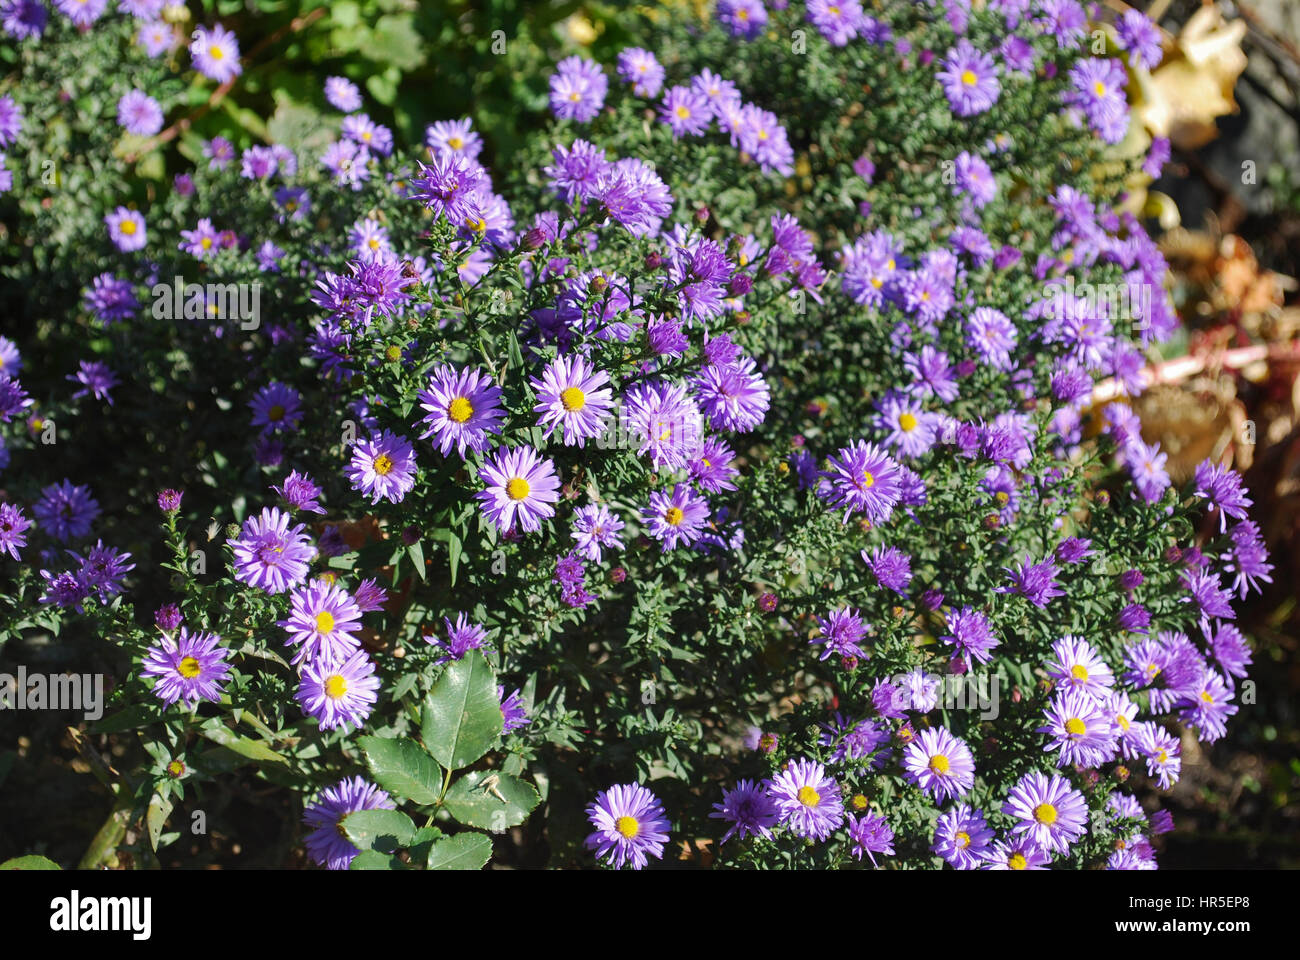 Aster alpinus 'Dunkle Shone' (Dark Beauty) blossoming. Decorative plants for autumn garden. Stock Photo